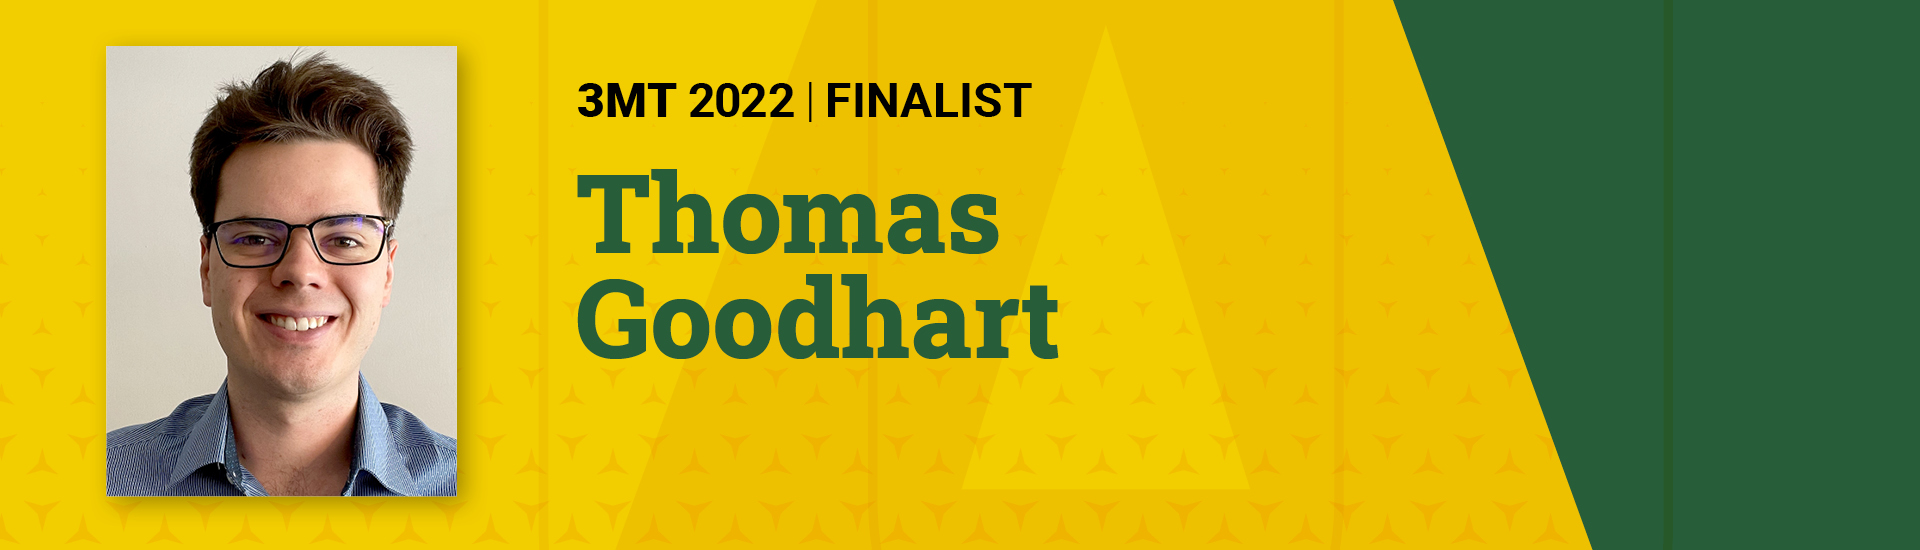 3MT 2022 Finalist Thomas Goodhart